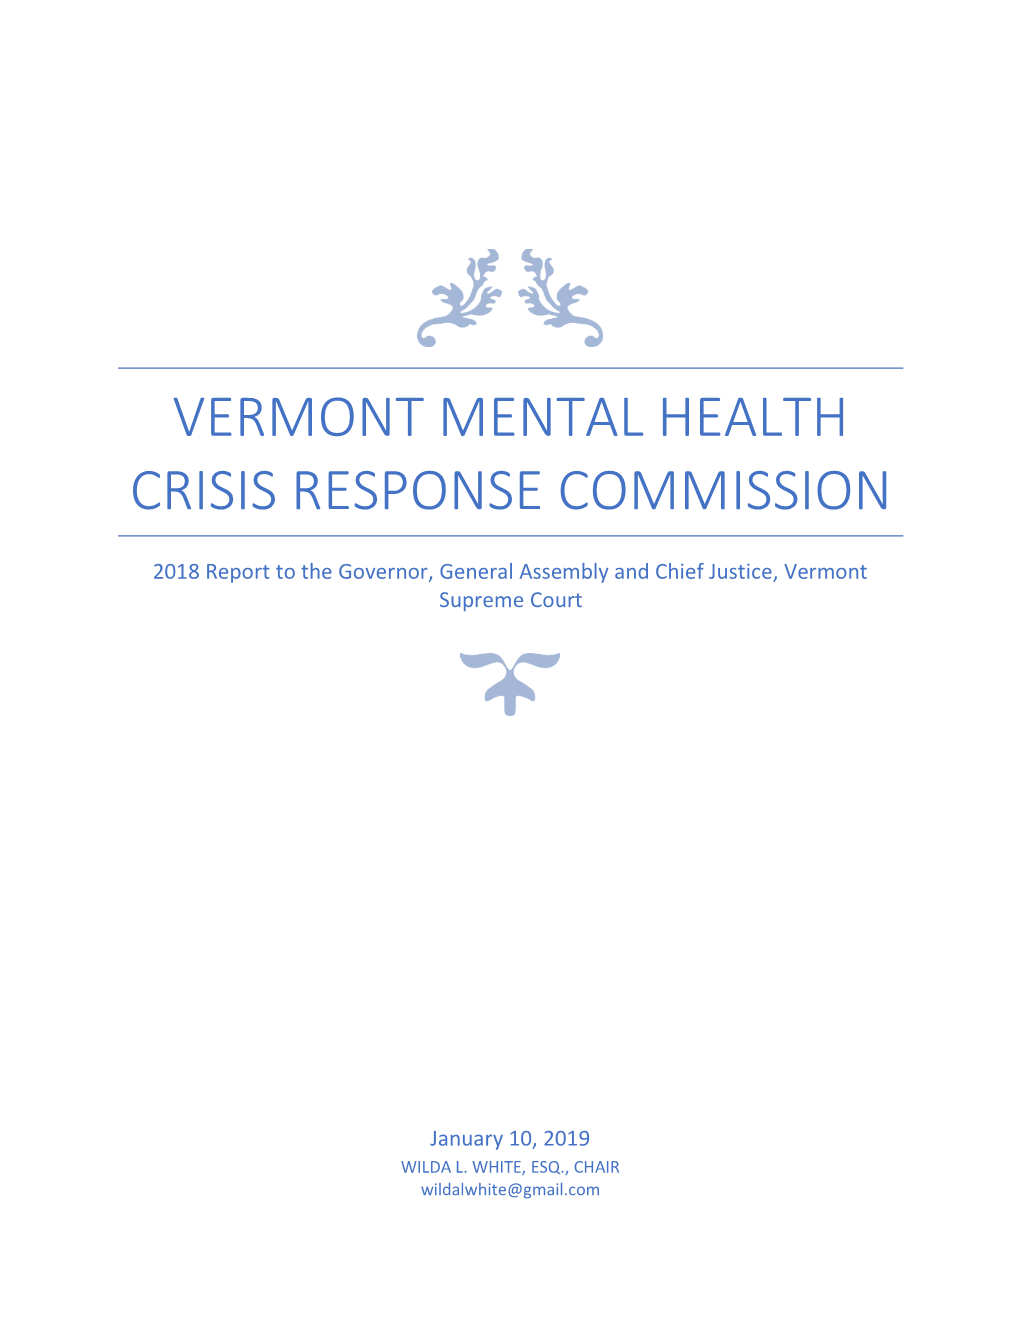 Vermont Mental Health Crisis Response Commission